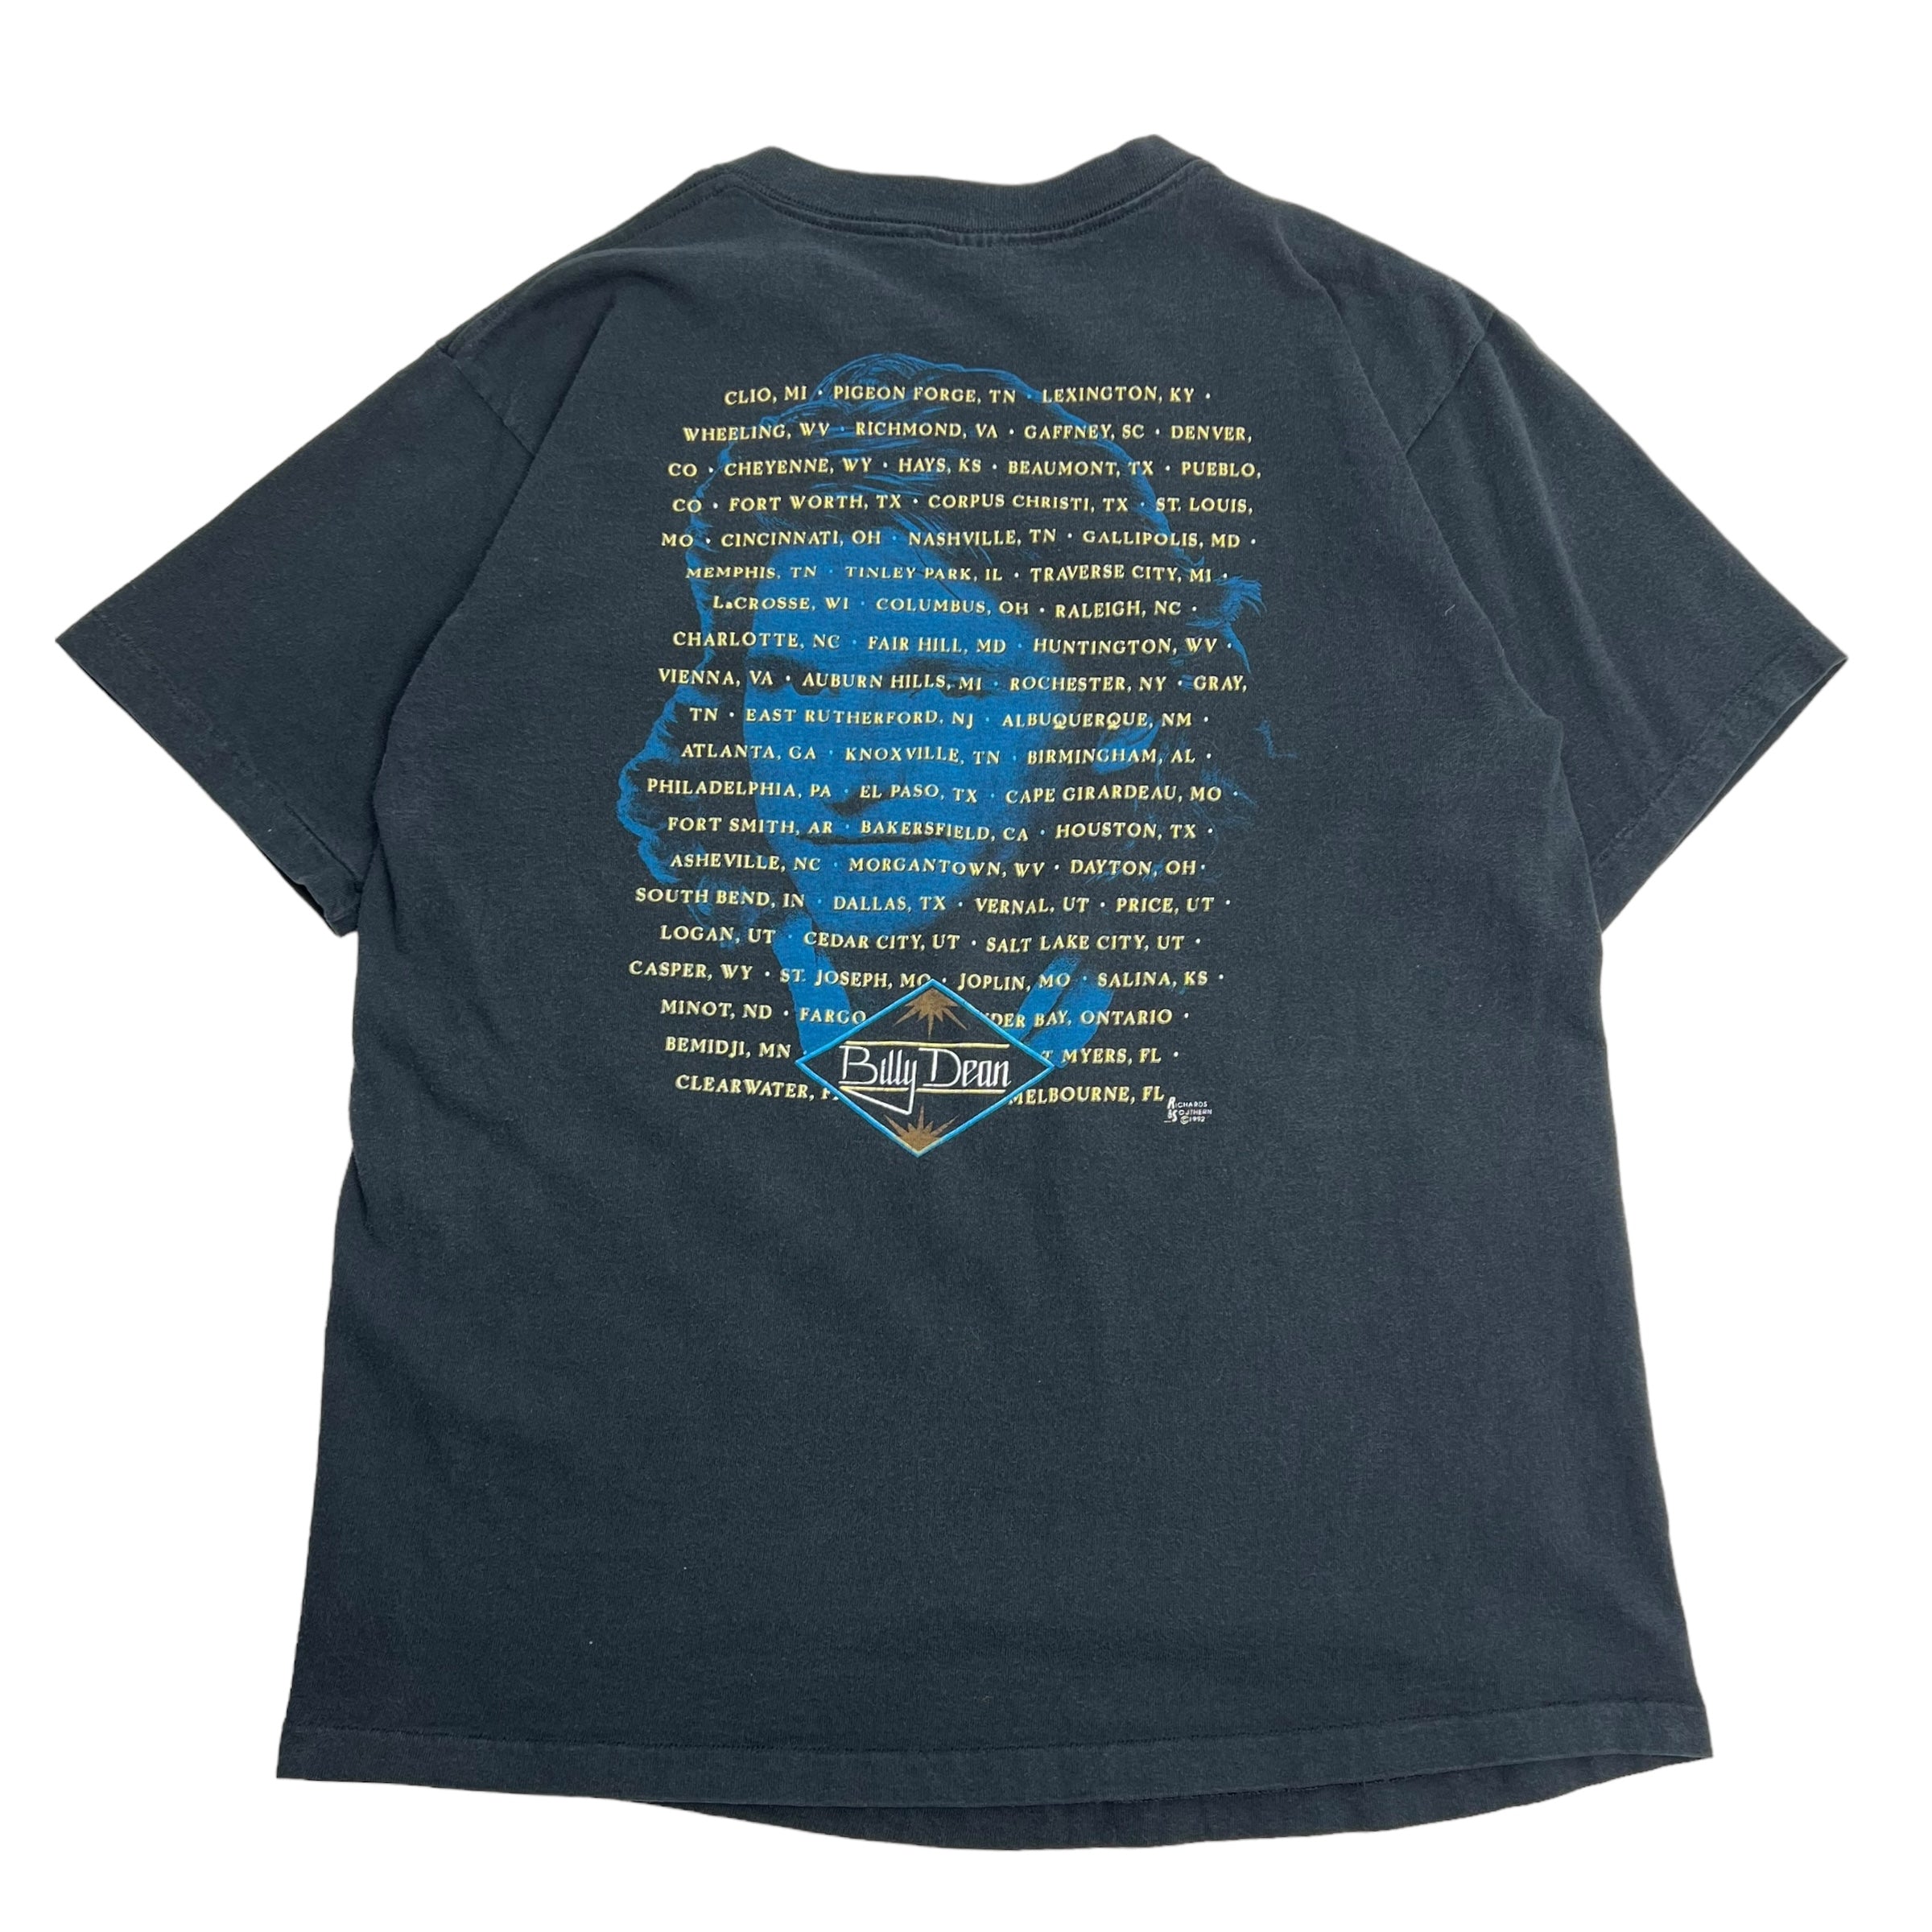 1992 Billy Dean Tour T-shirt - Vintage Concert T-Shirt